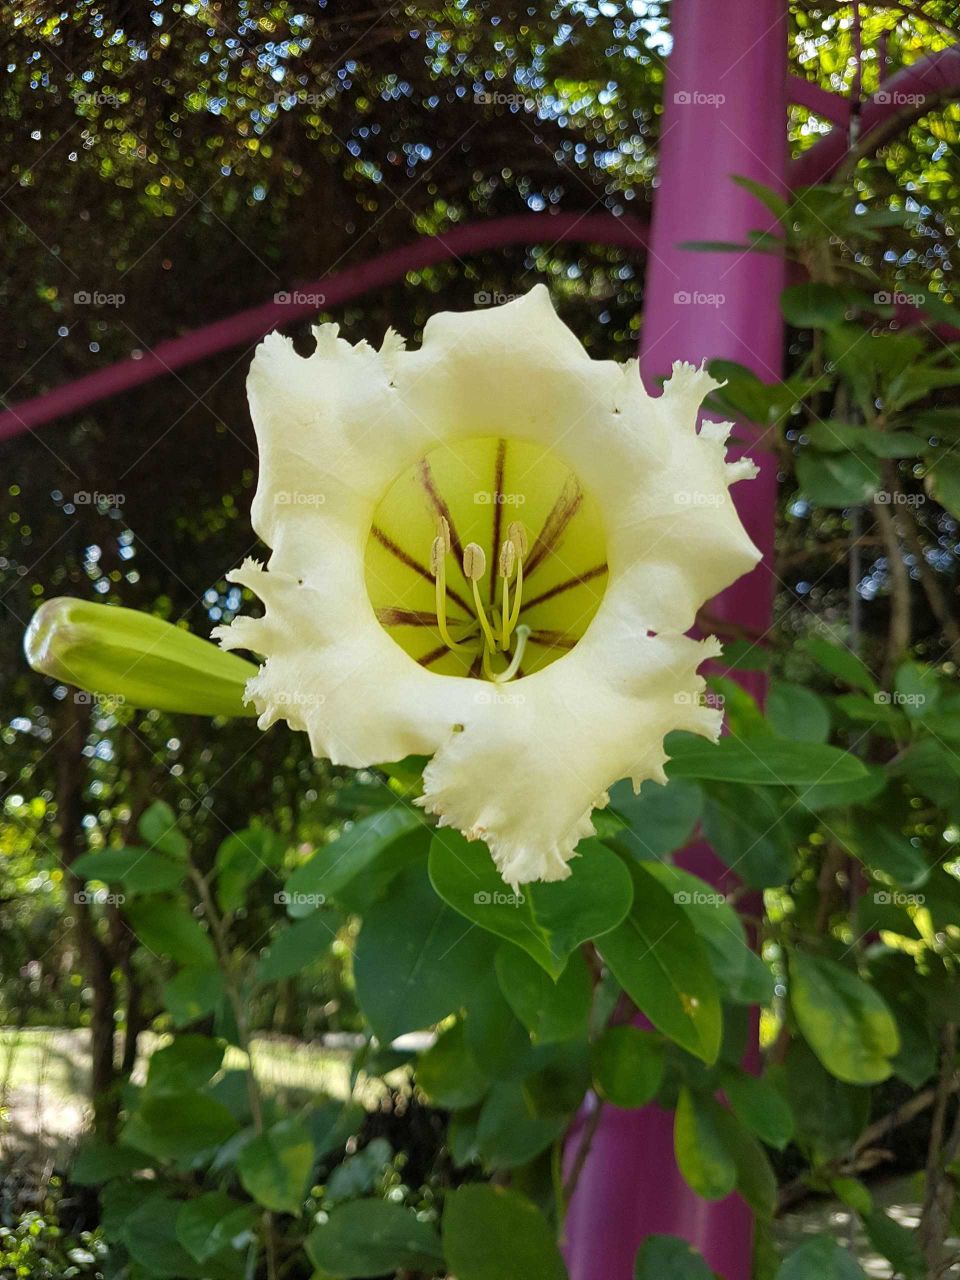 Singapore Flower